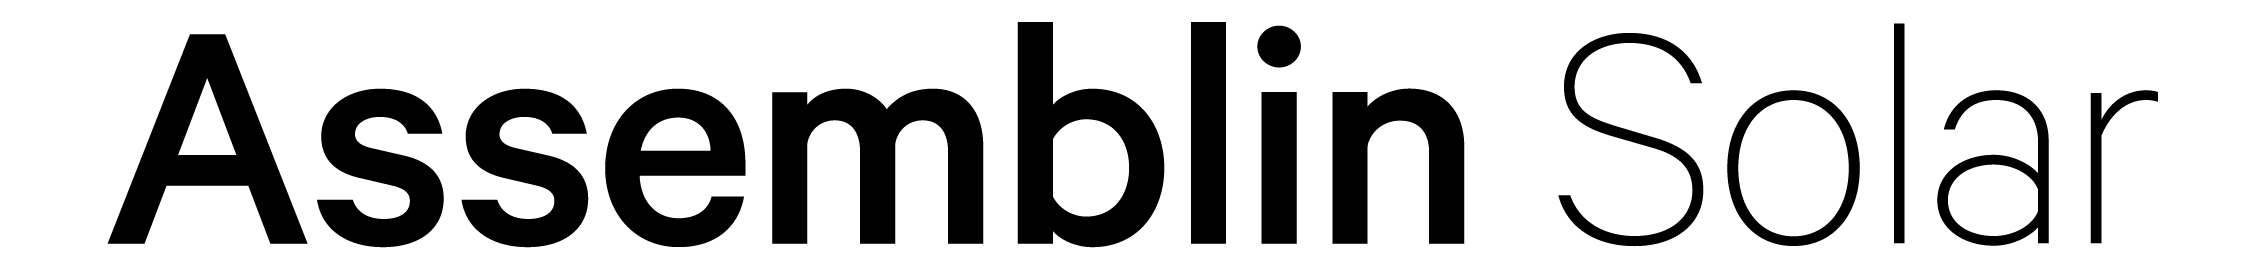 Assemblin-solar-logo_Black